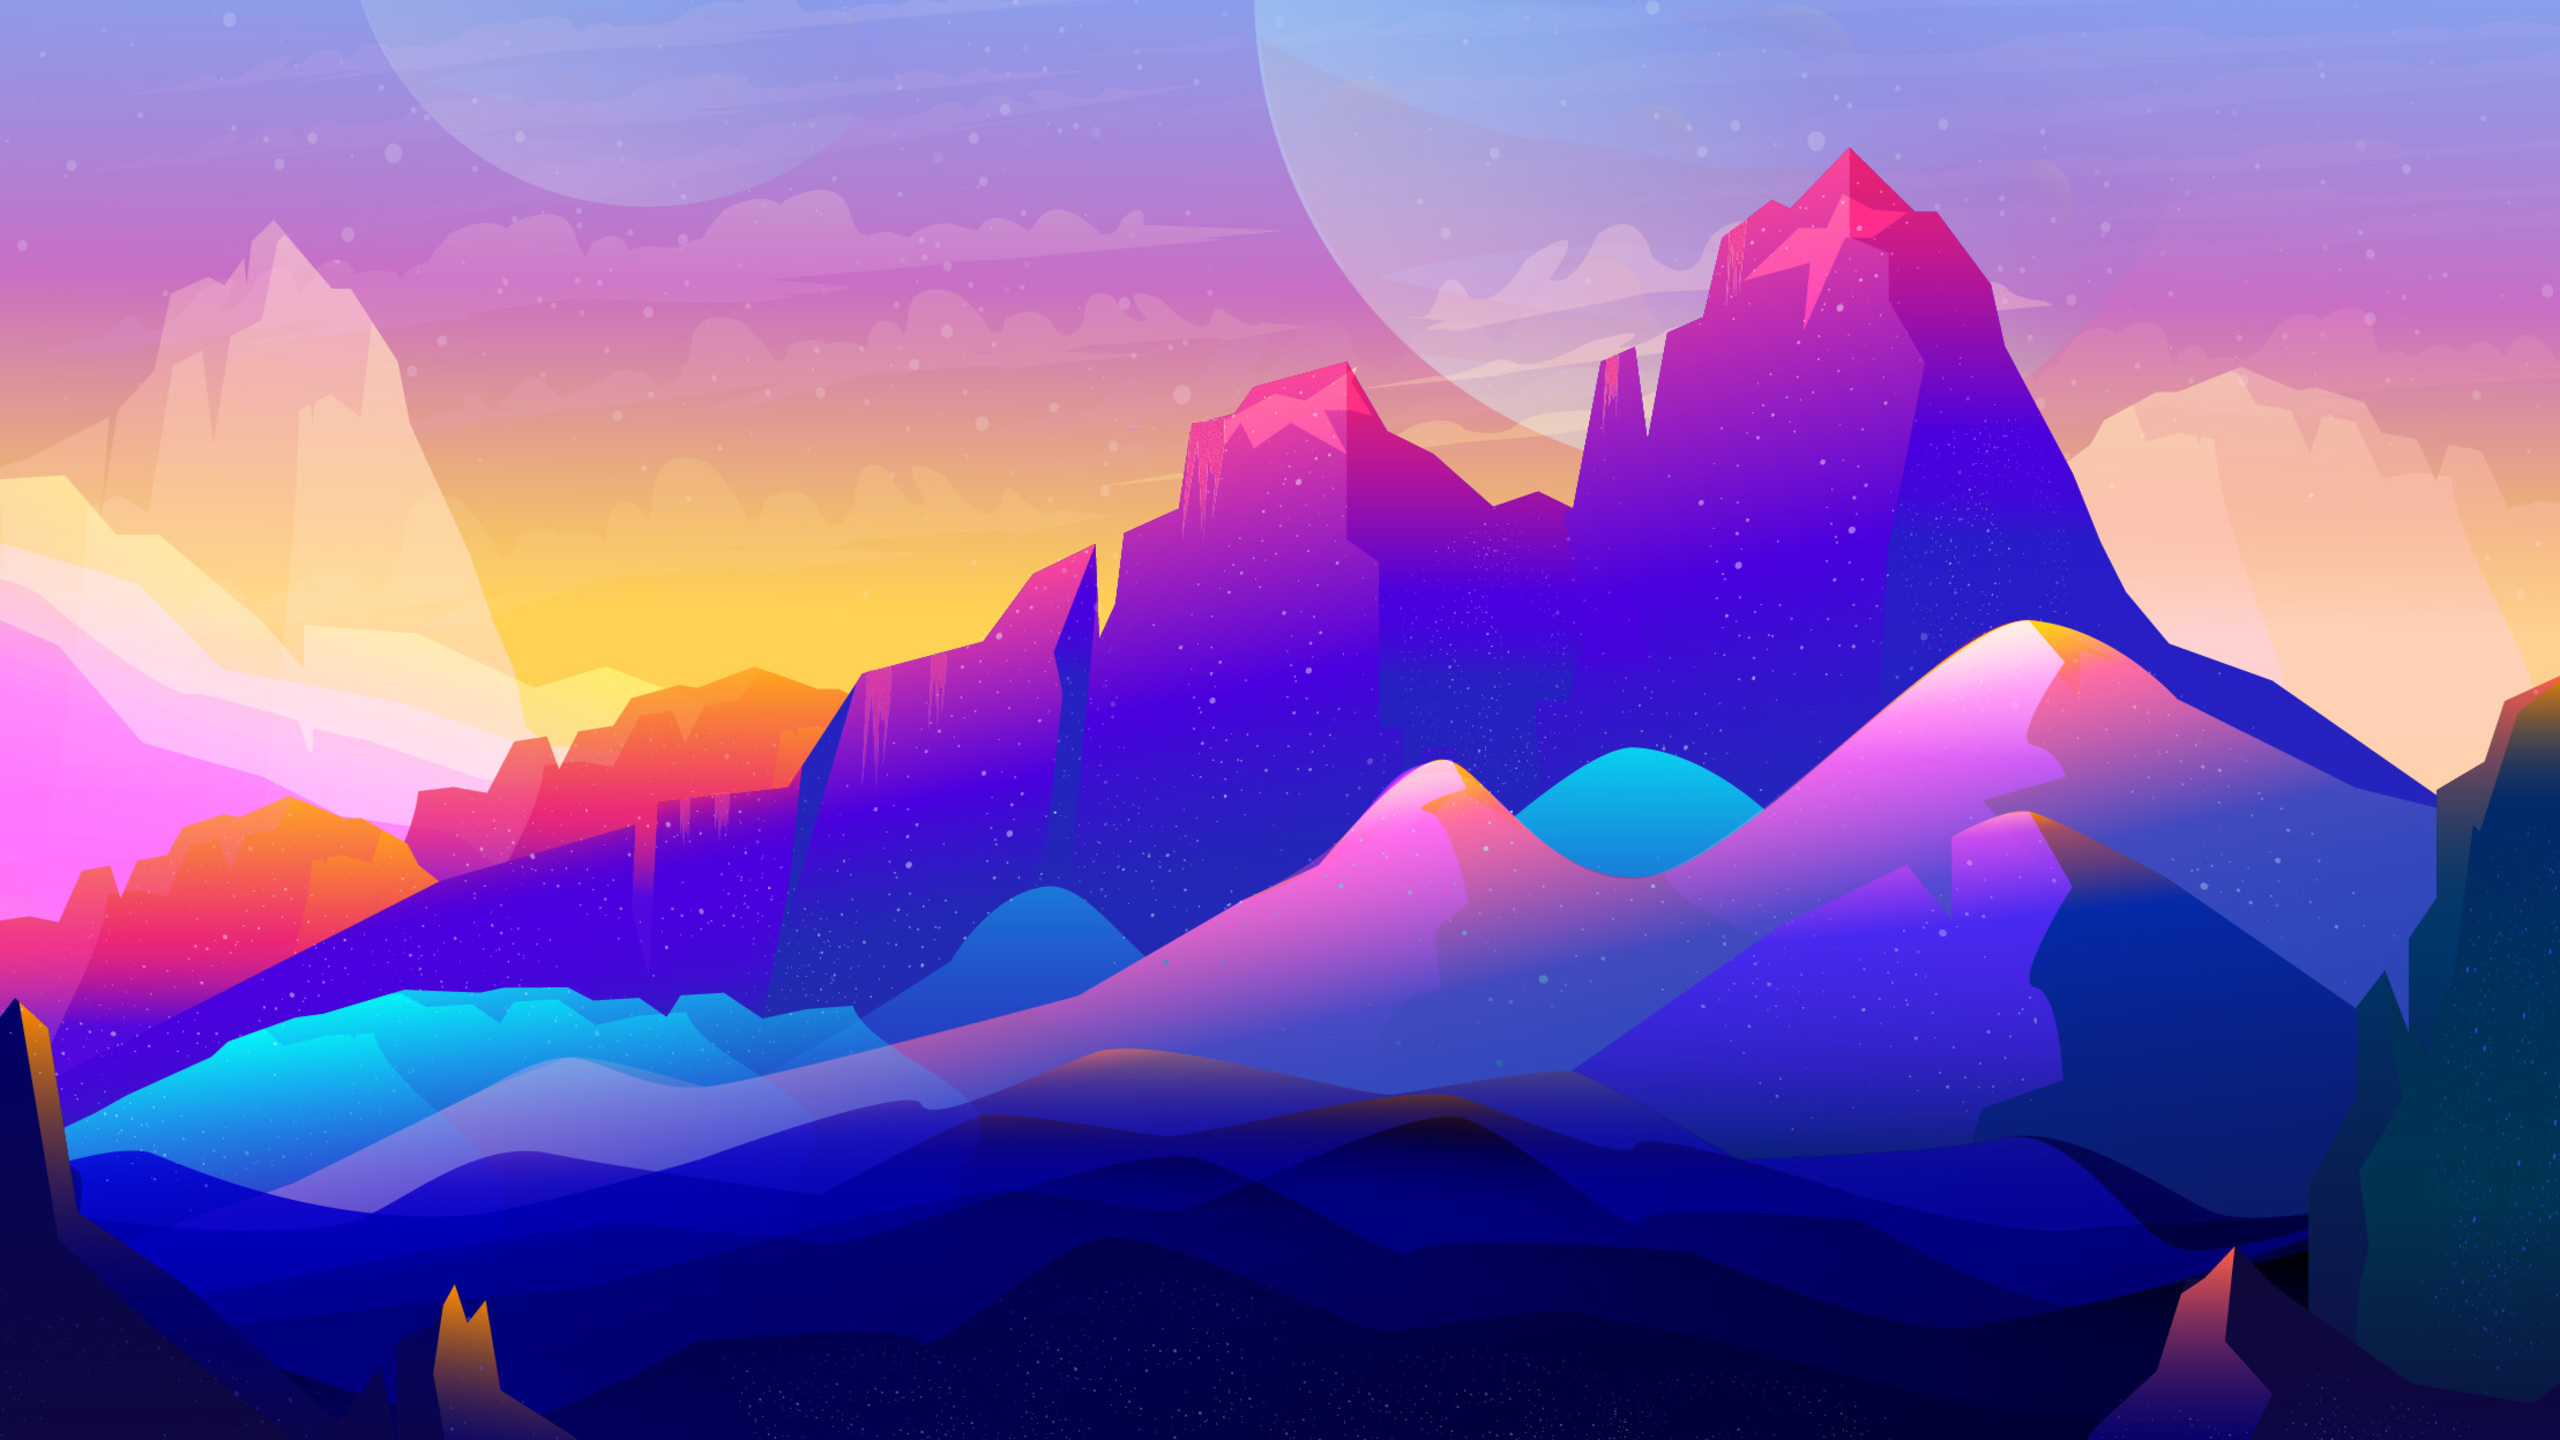 2560x1440 Rock Mountains Landscape Colorful Illustration Minimalist